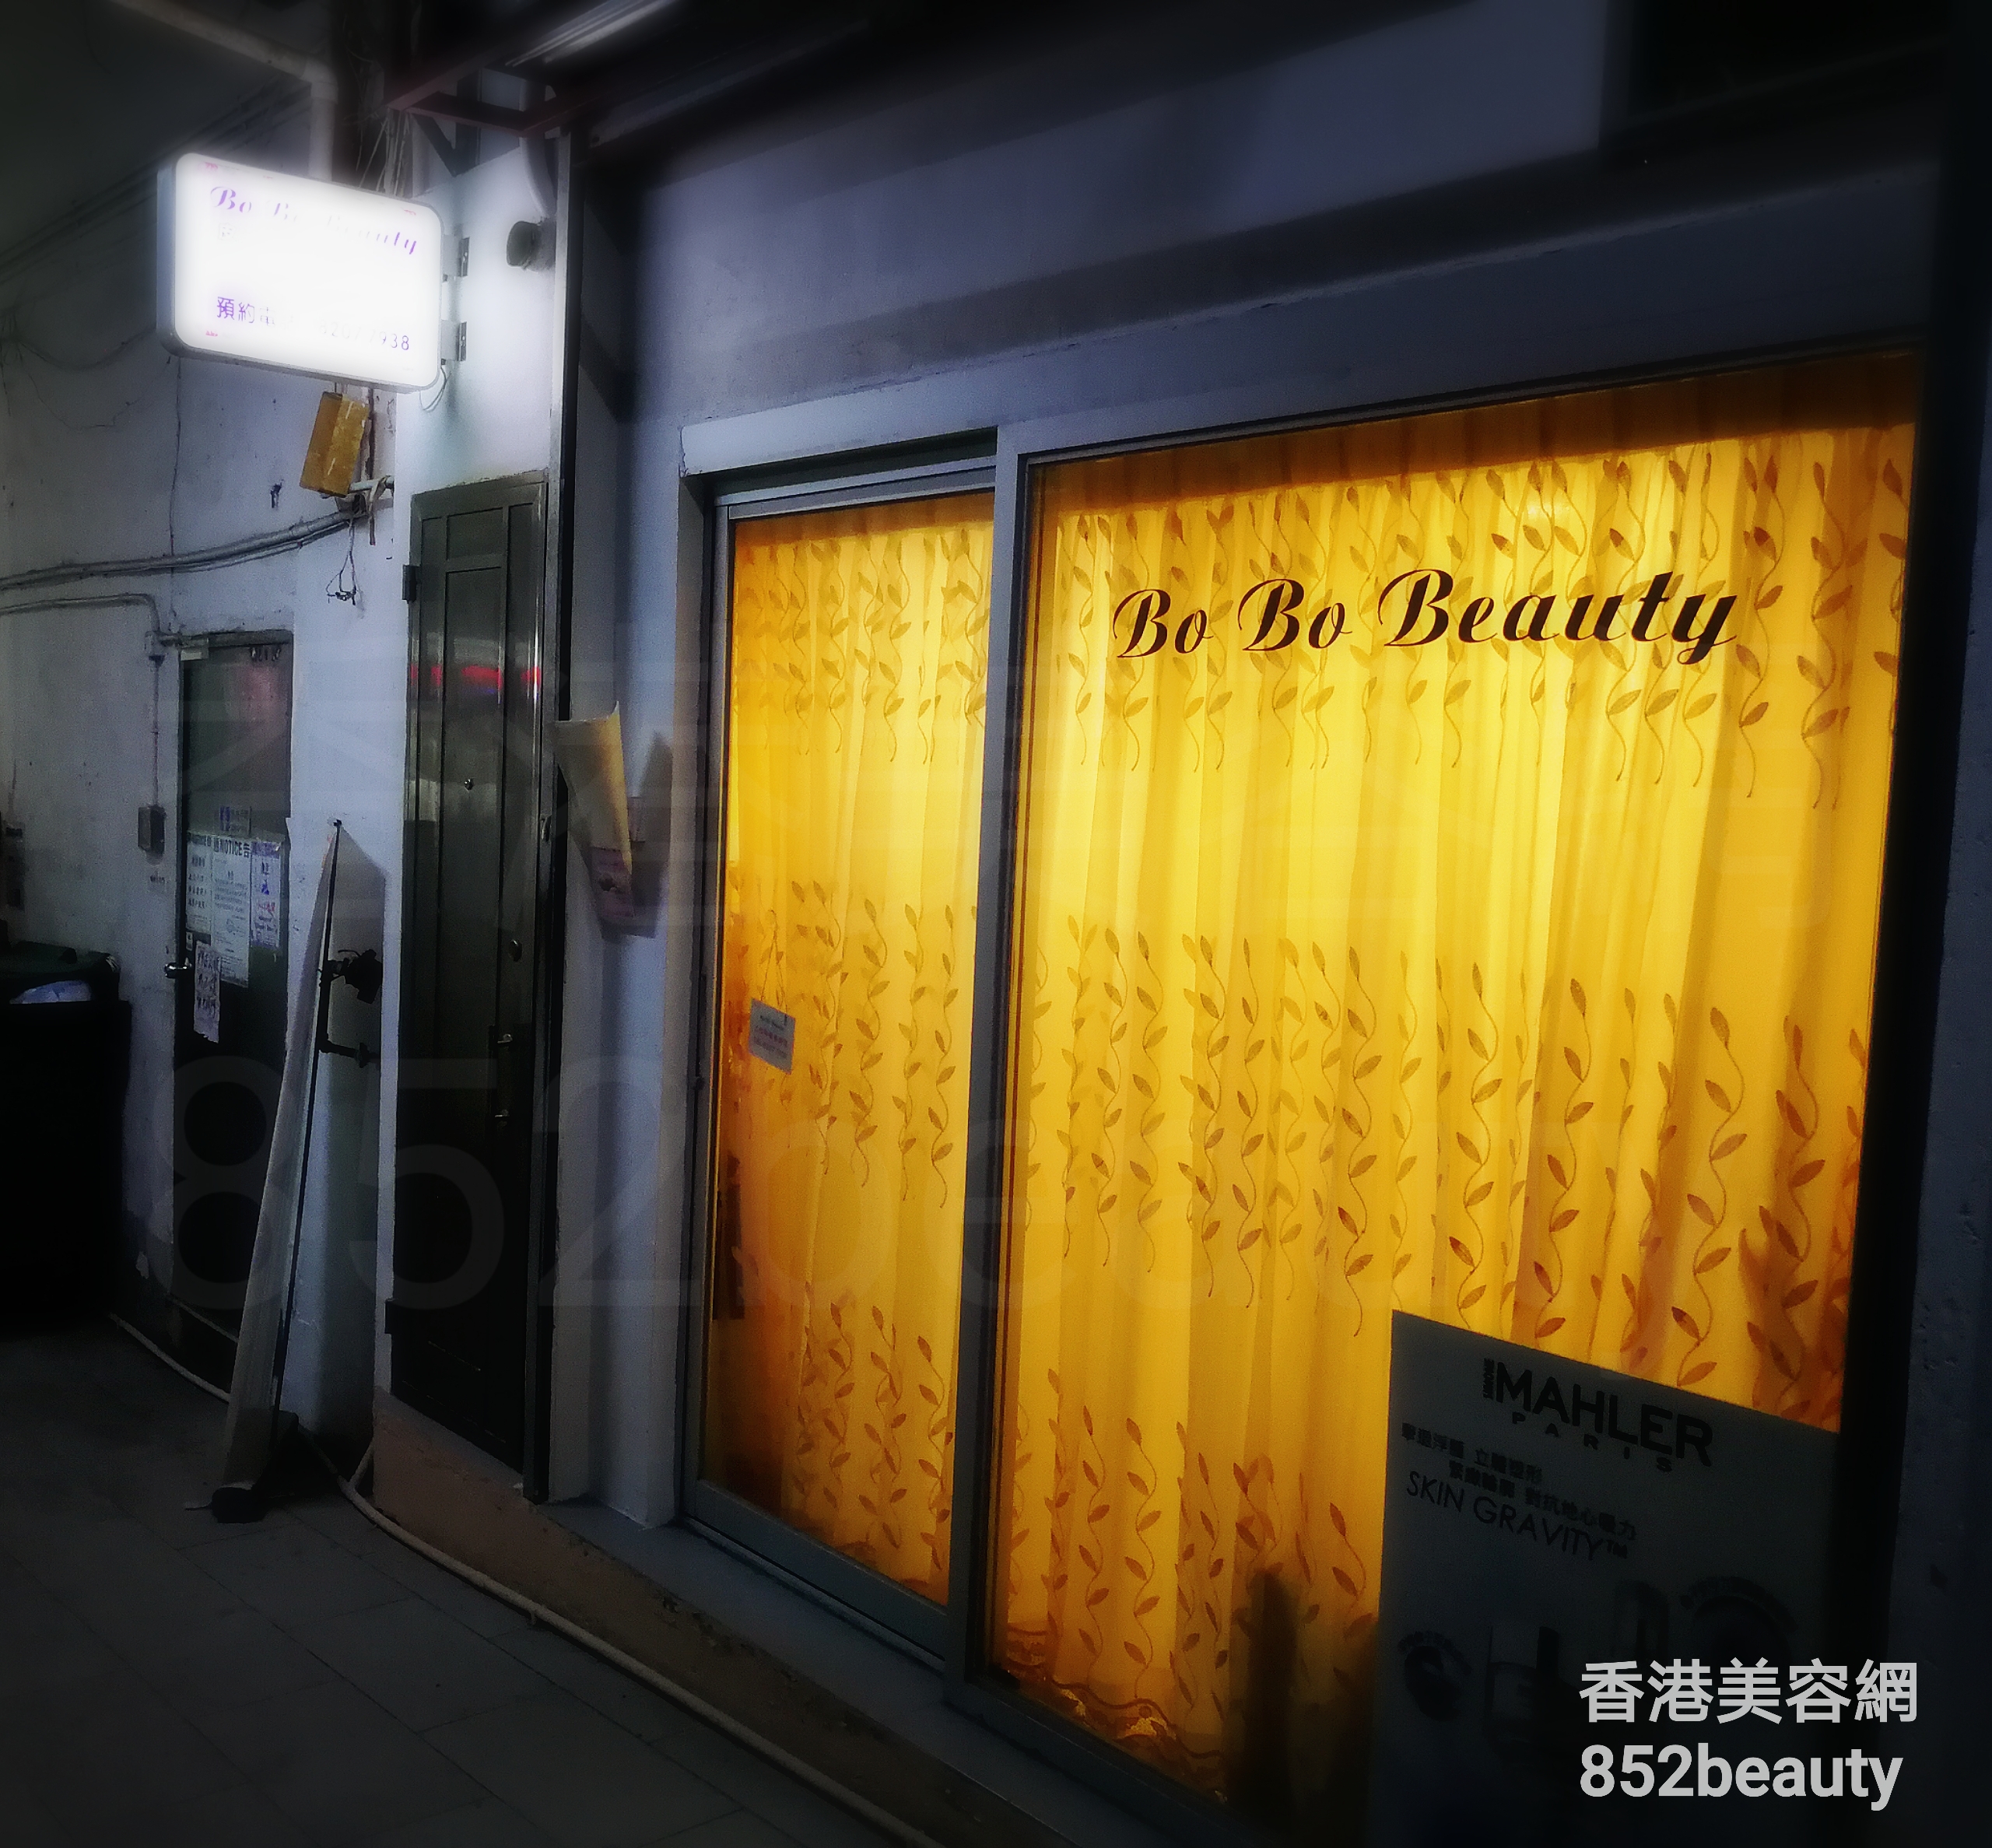 香港美容網 Hong Kong Beauty Salon 美容院 / 美容師: Bo Bo Beauty